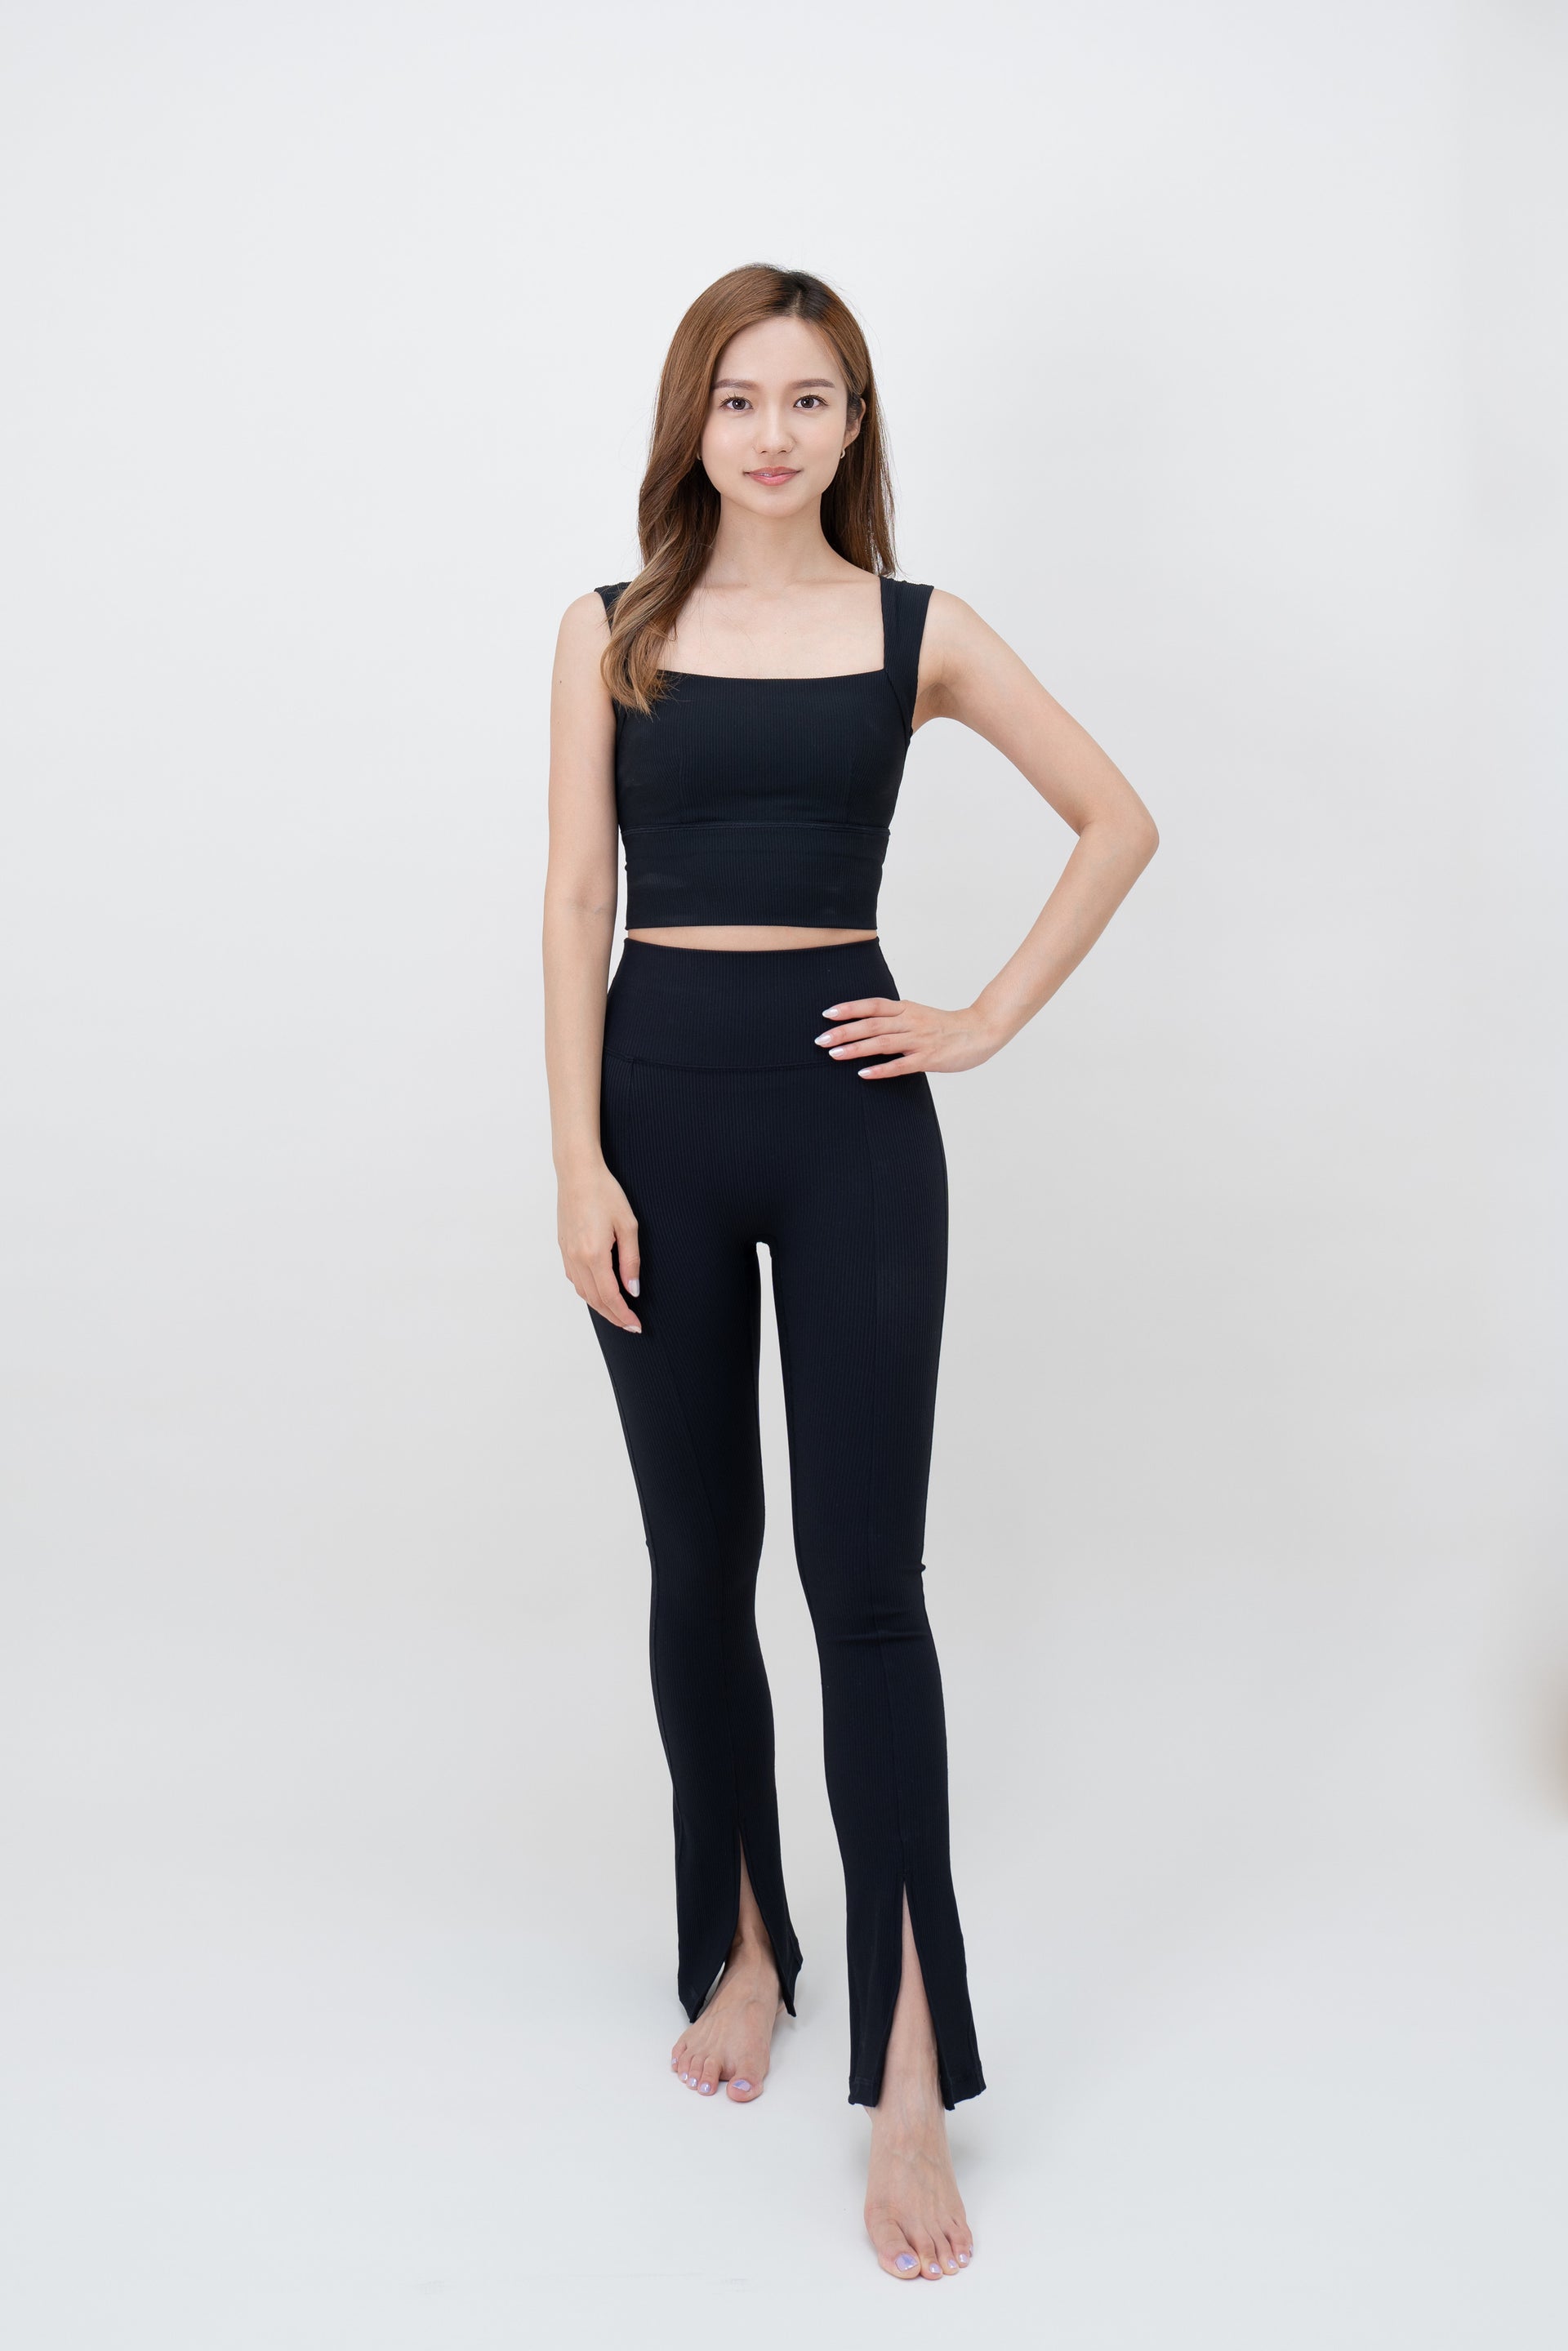 Buy Kanna Fabric Golden Latest & Shinning Shimmer Leggings Outfit for Women  at